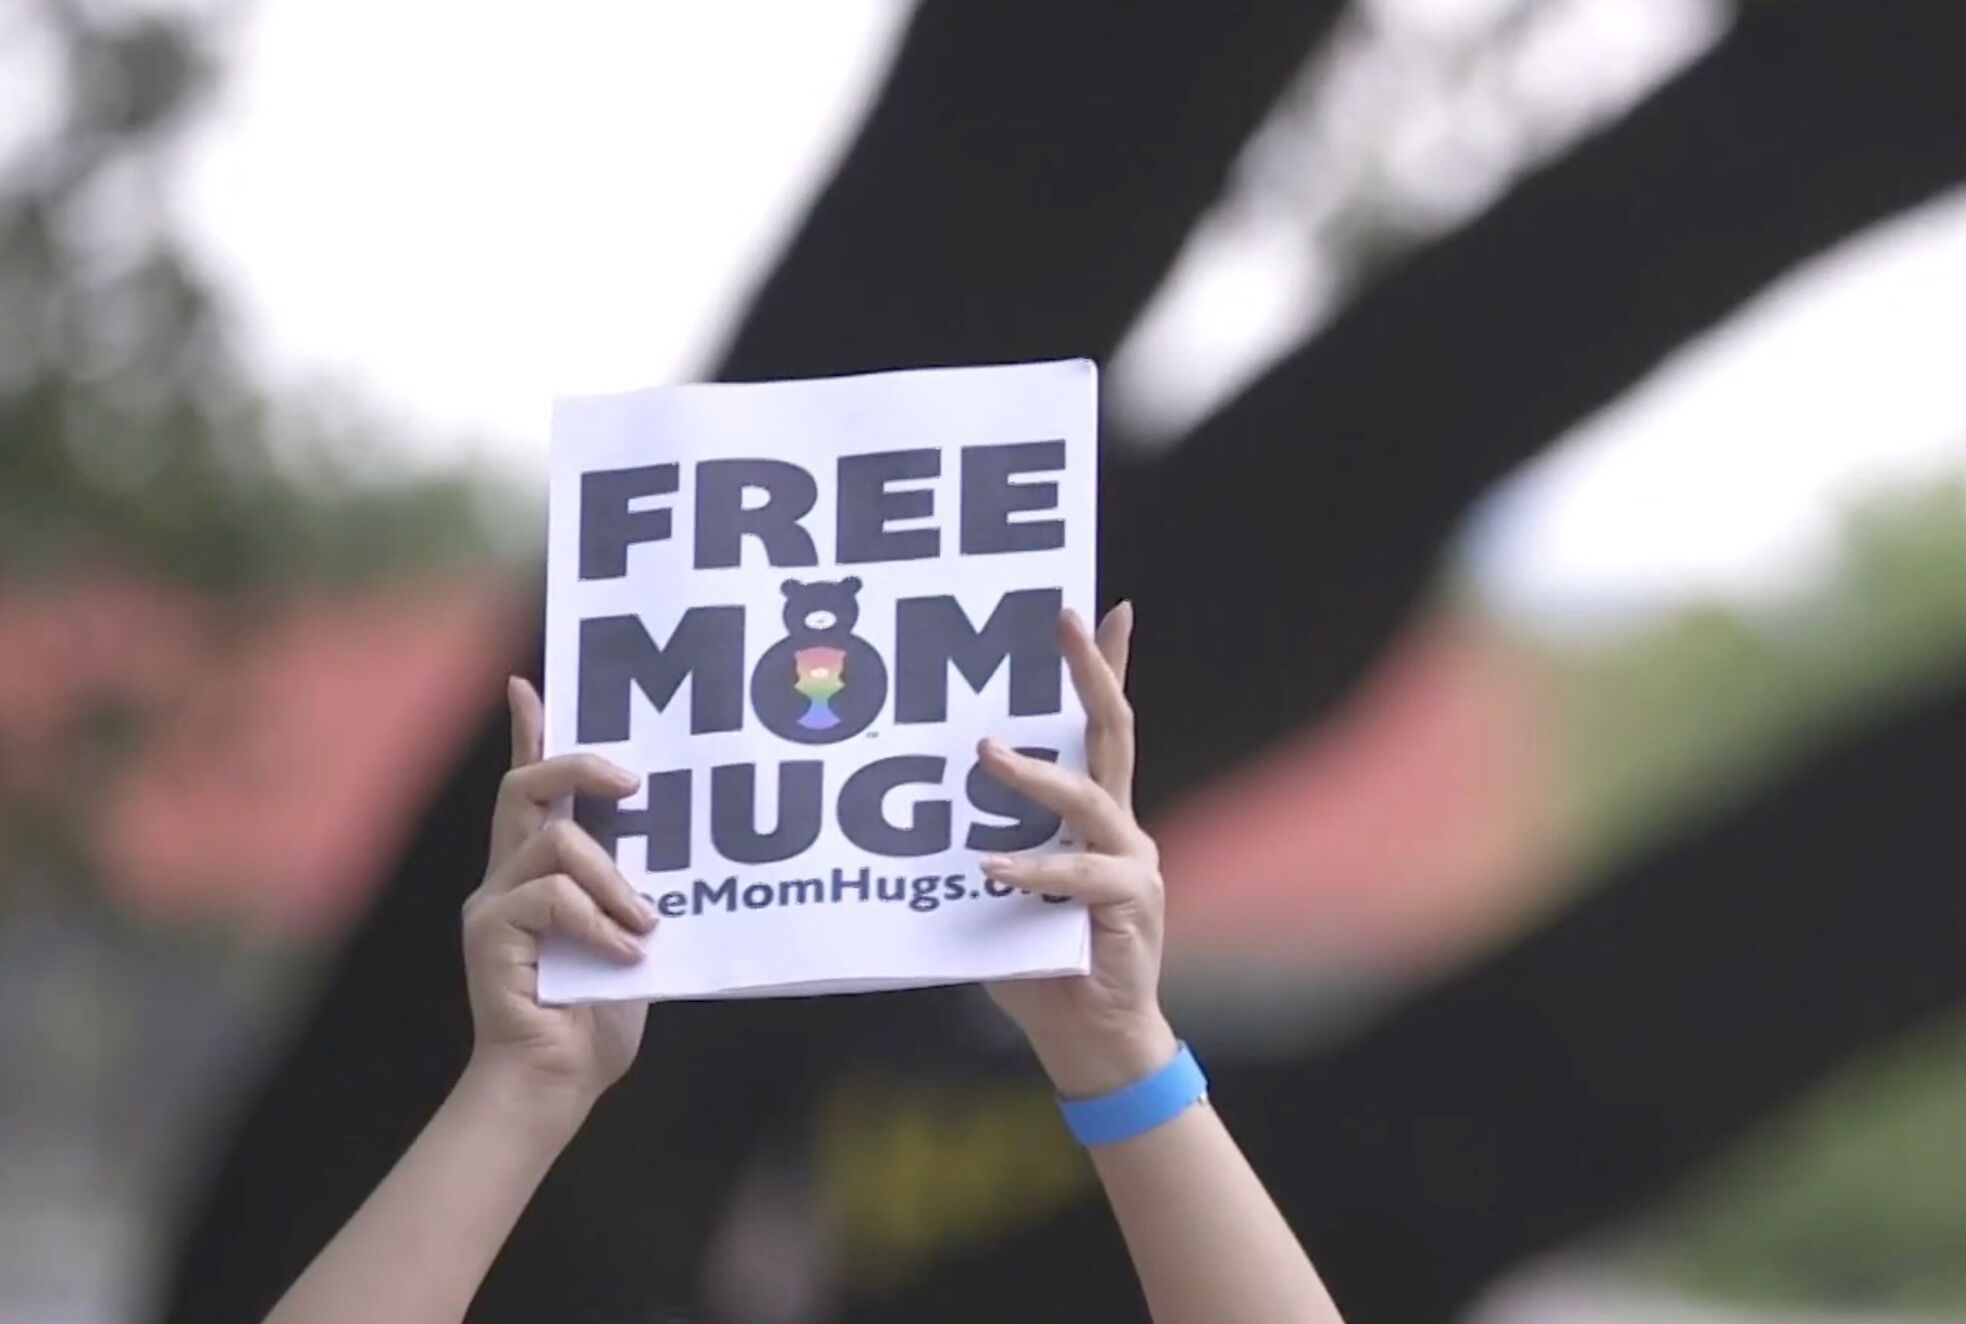 Free Mom Hugs volunteer holding up a "Free Mom Hugs" sign